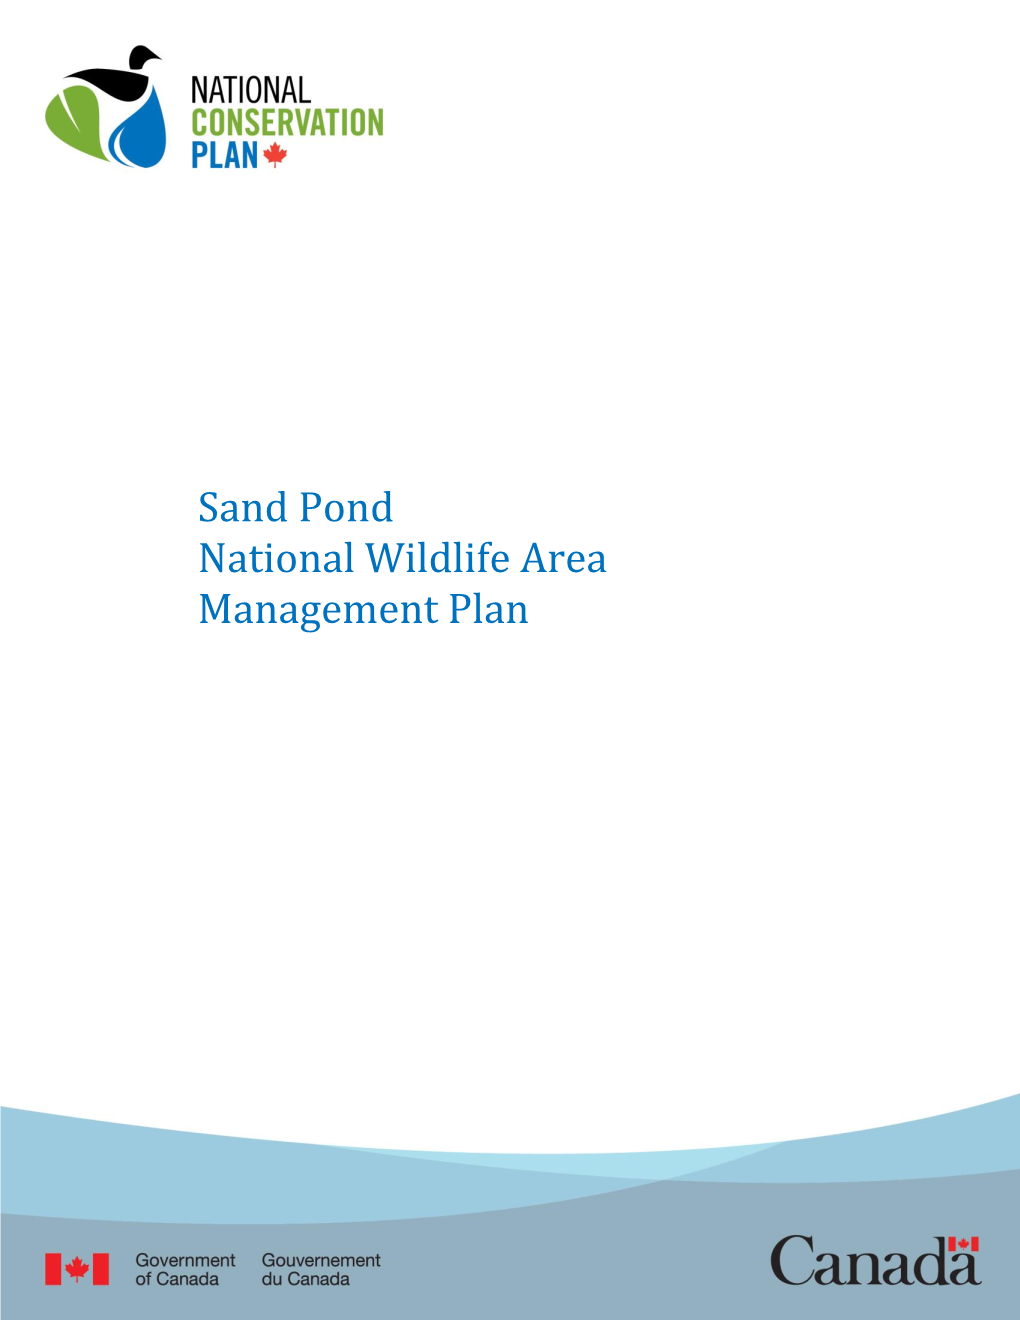 Sand Pond National Wildlife Area Management Plan